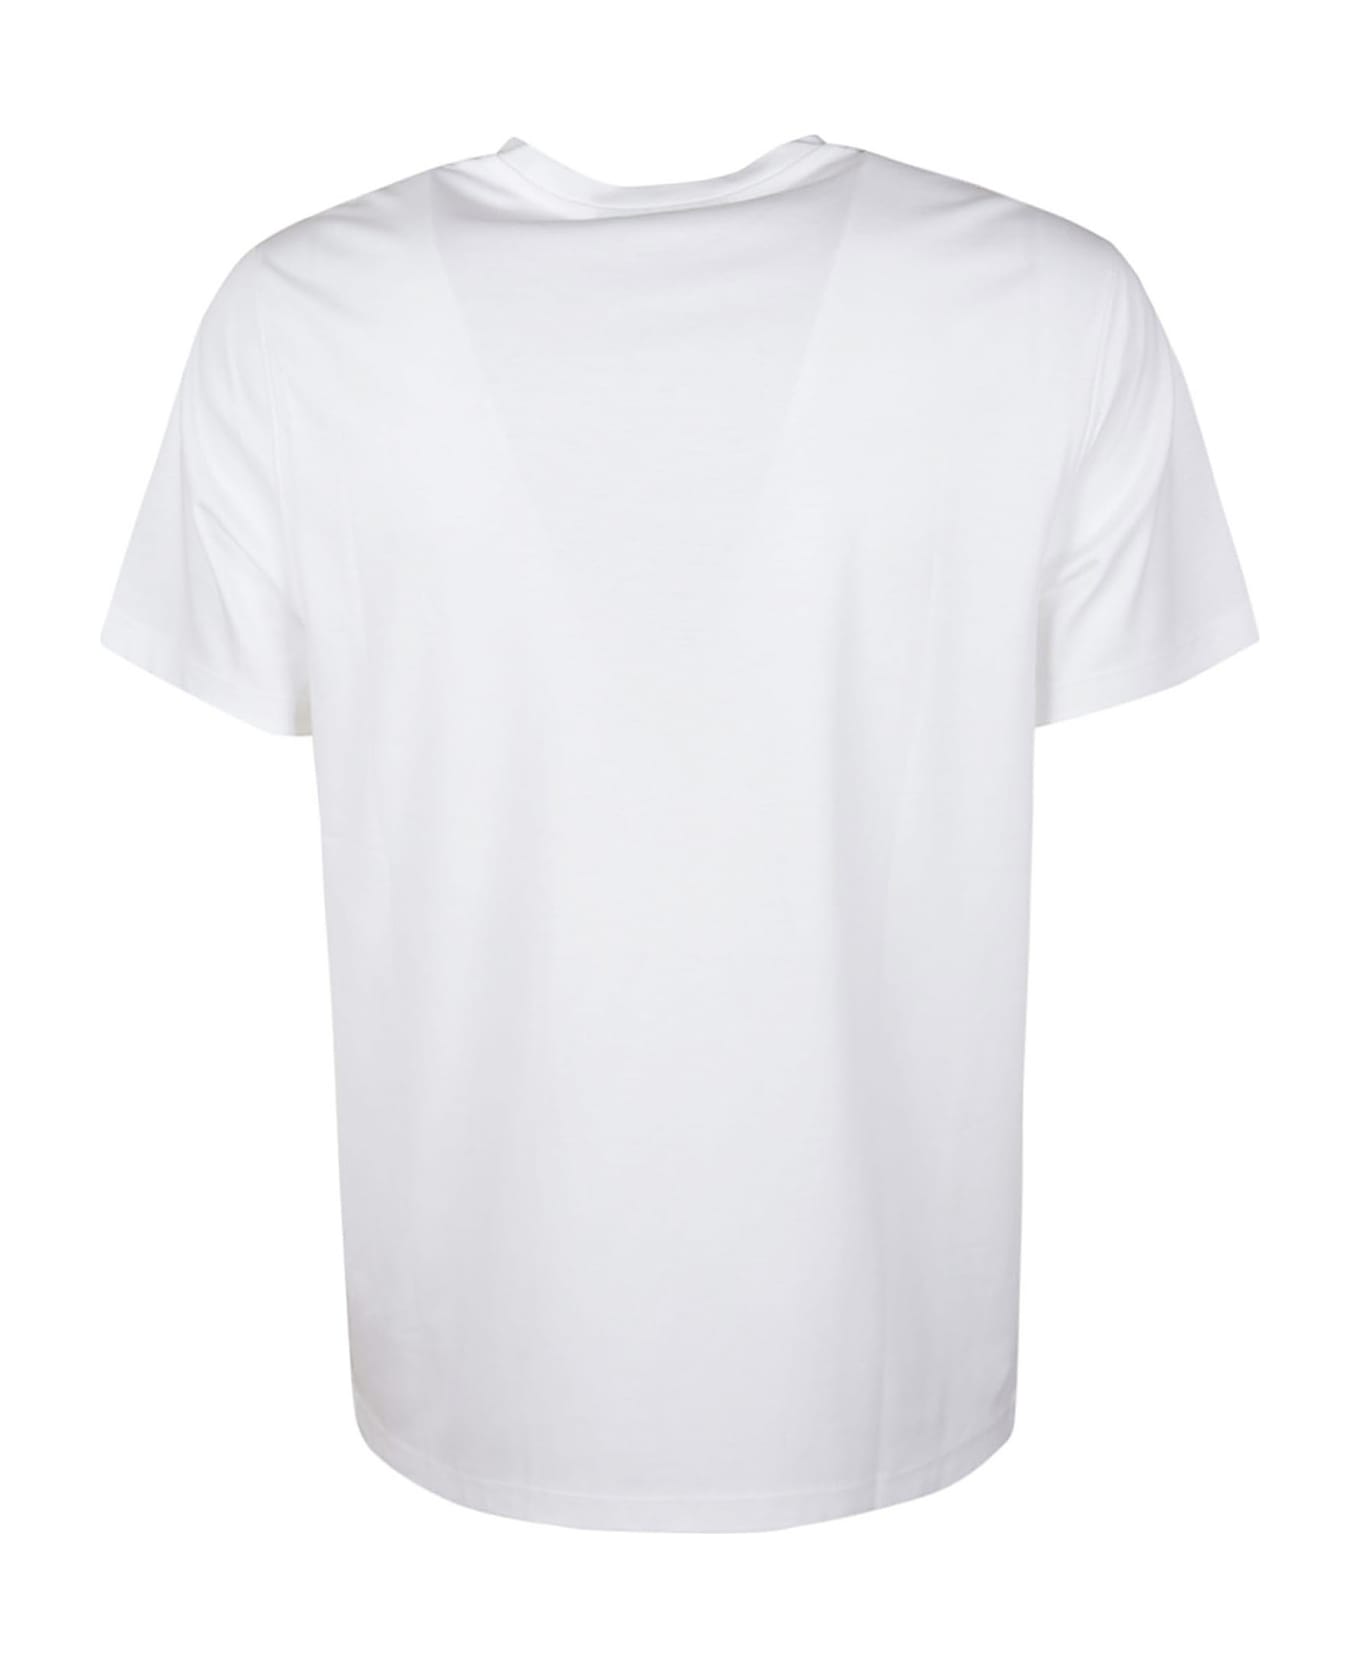 Michael Kors Round Neck T-shirt - White